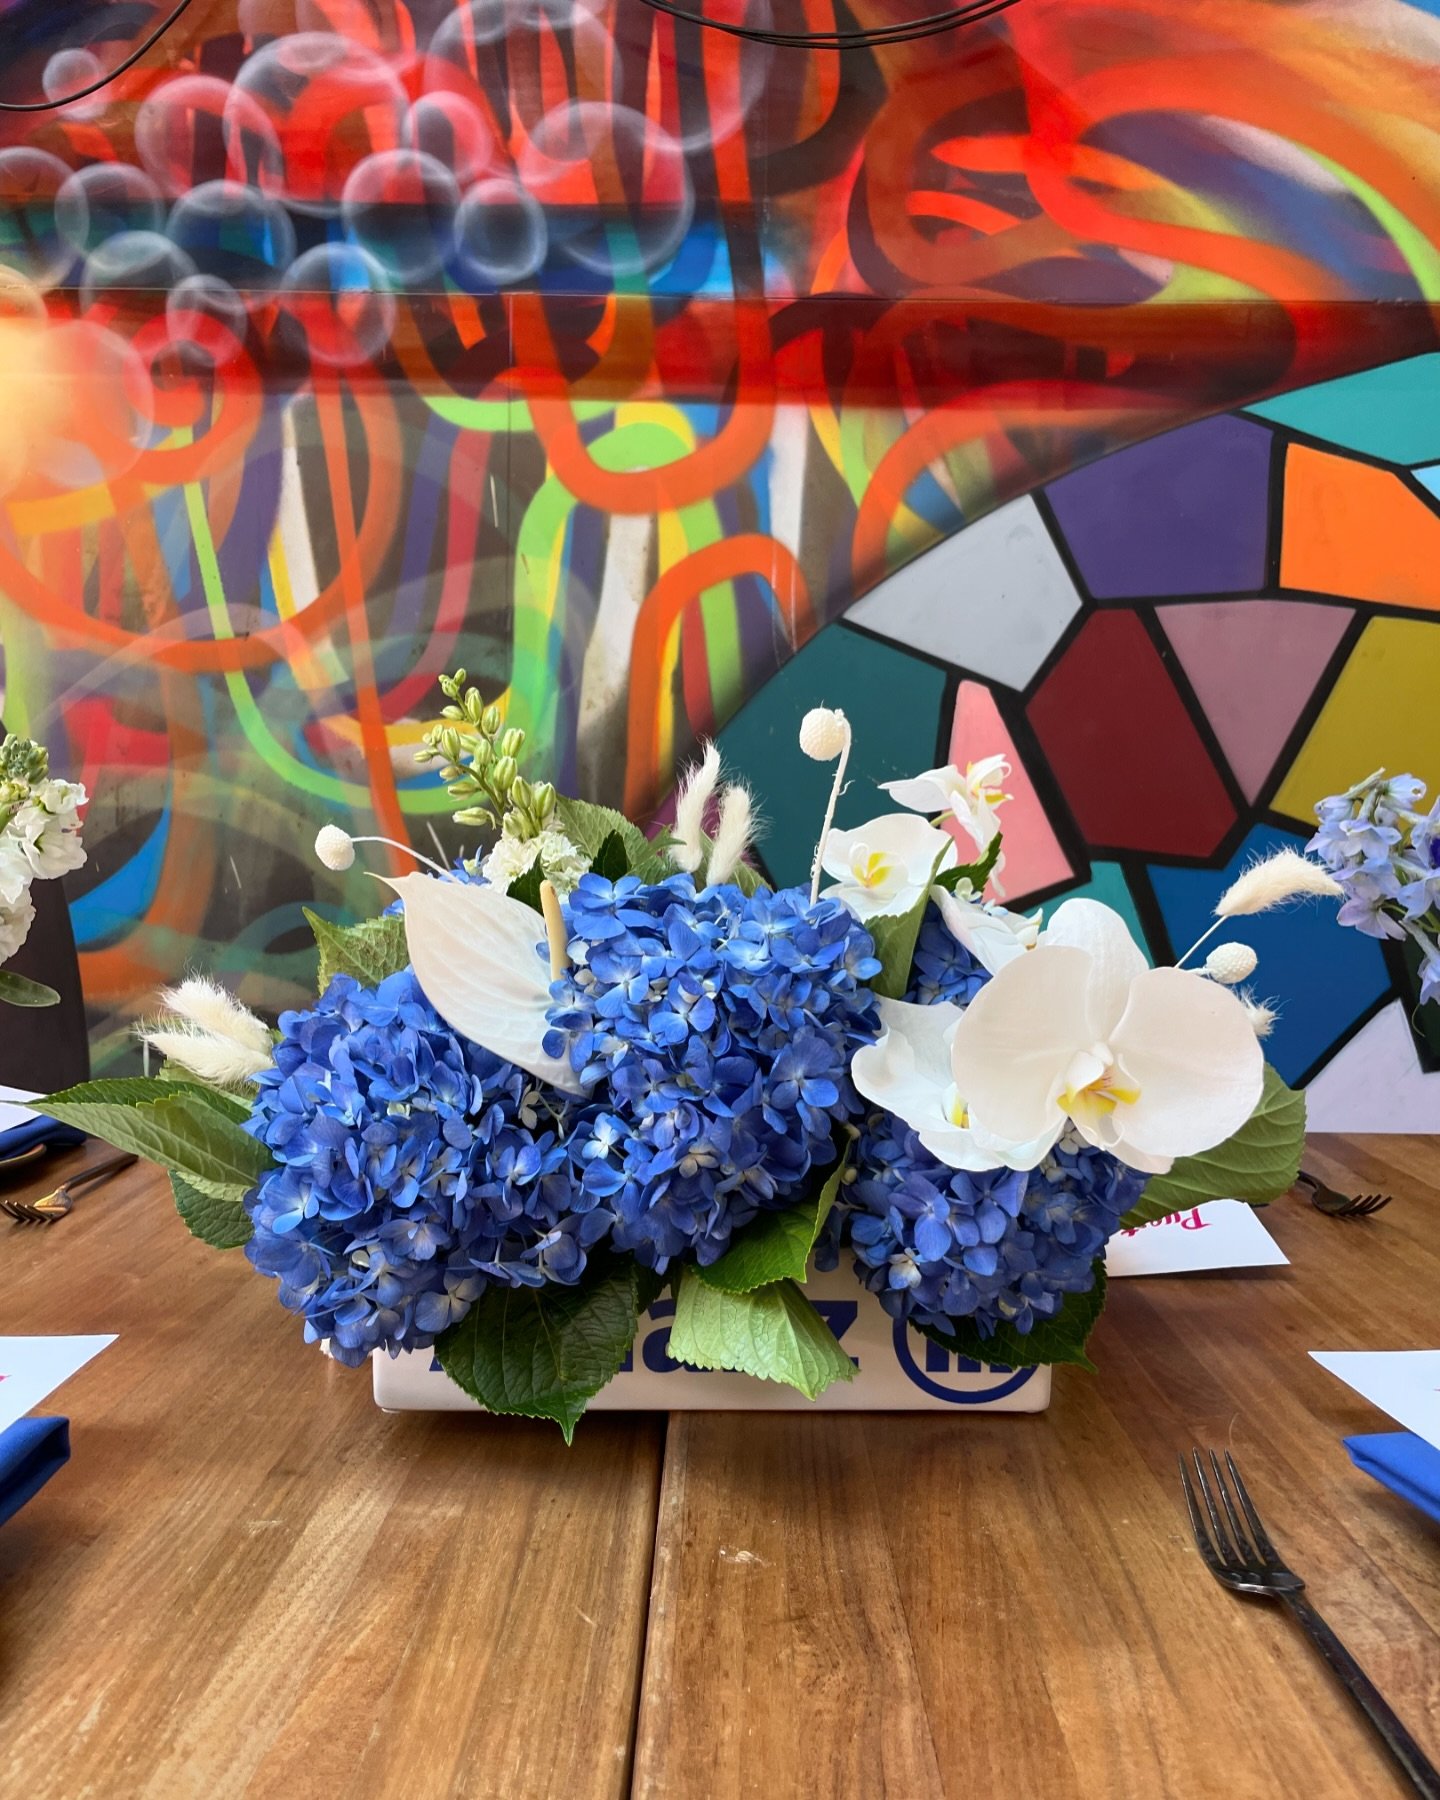 Blue blooms stealing the show in this vibrant floral arrangement! 💐💙&rdquo;

Floral Design | @sevenstems 
DMC Partner | @hostsglobal 
Venue | Puesto San Diego